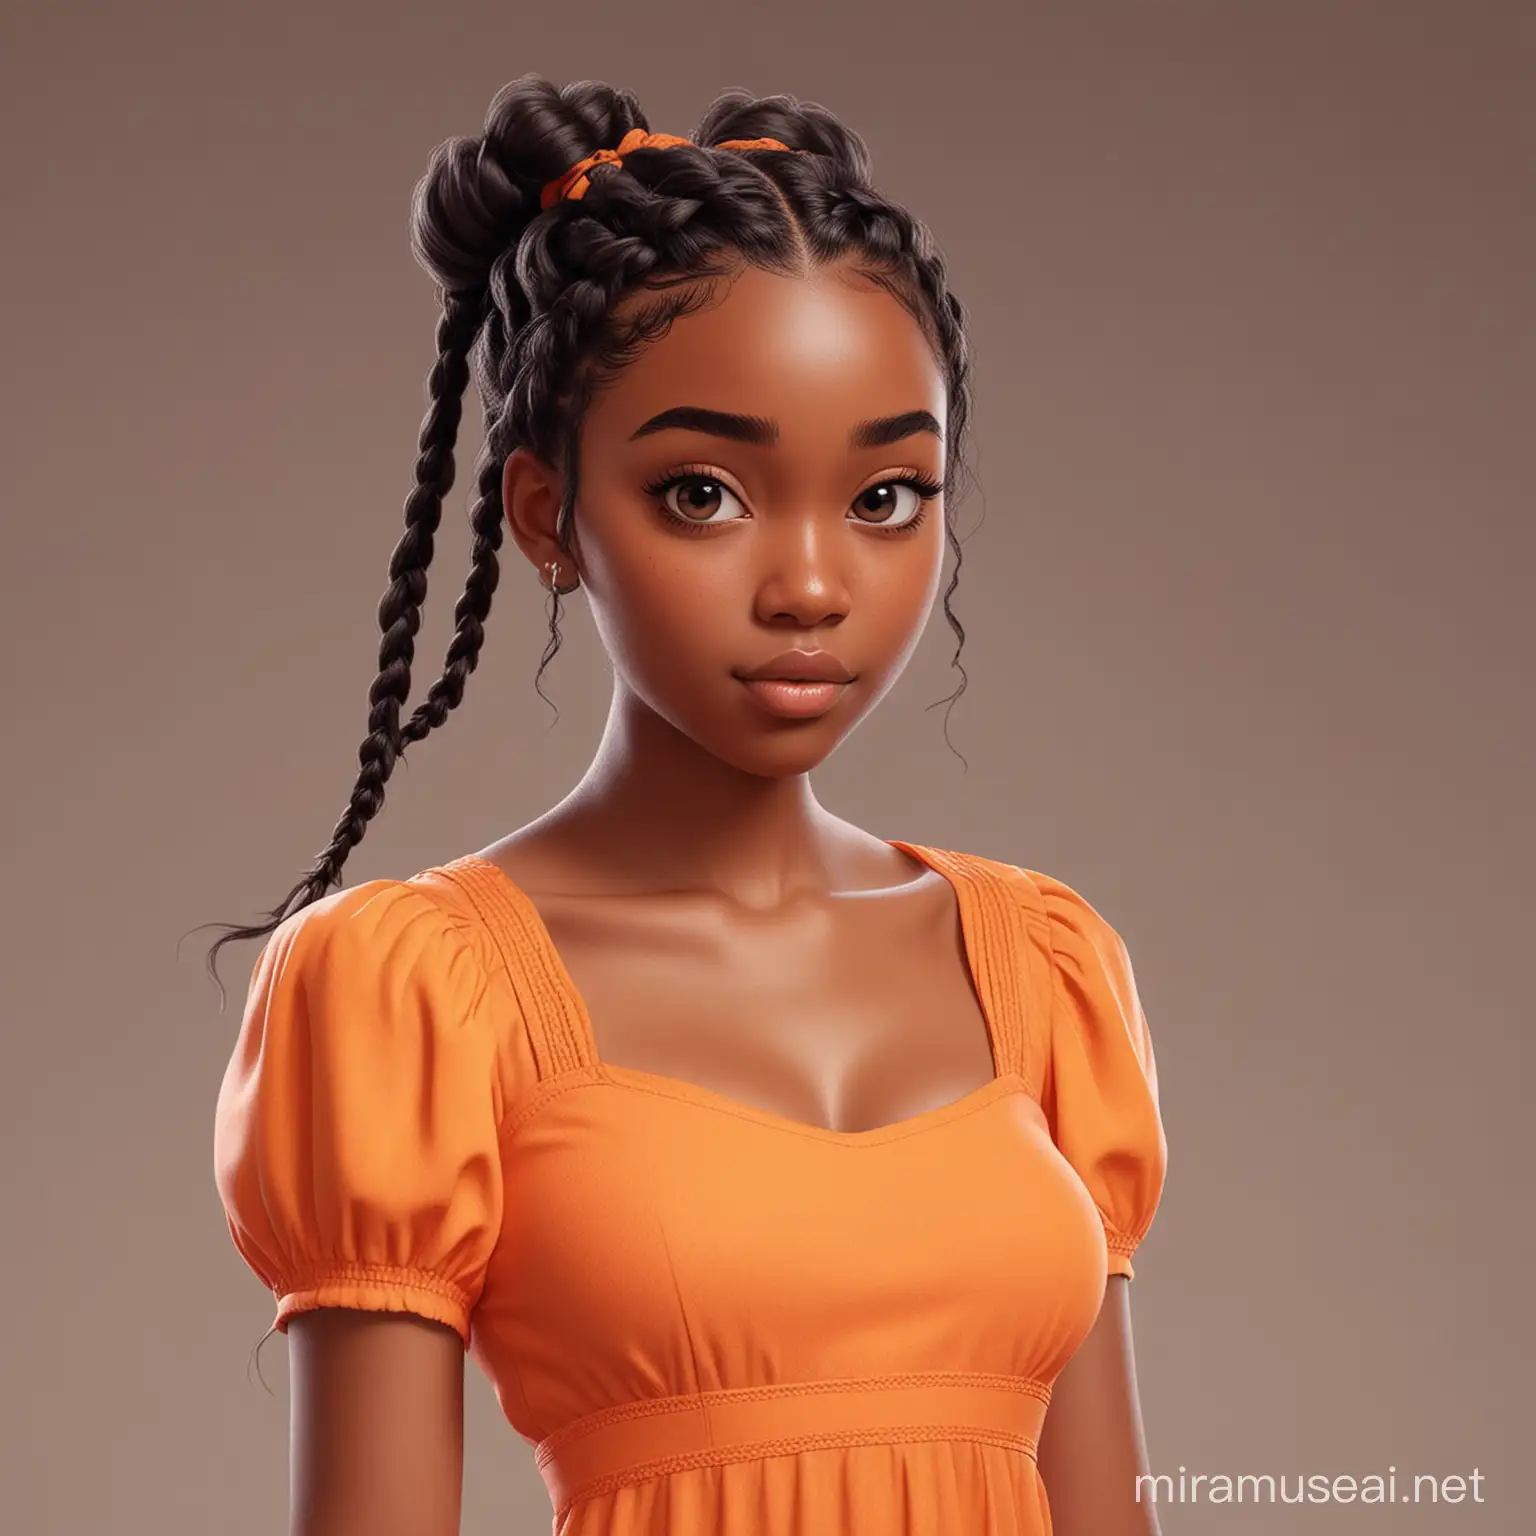 Adorable Black Girl with Short Braids in Vibrant Orange Dress